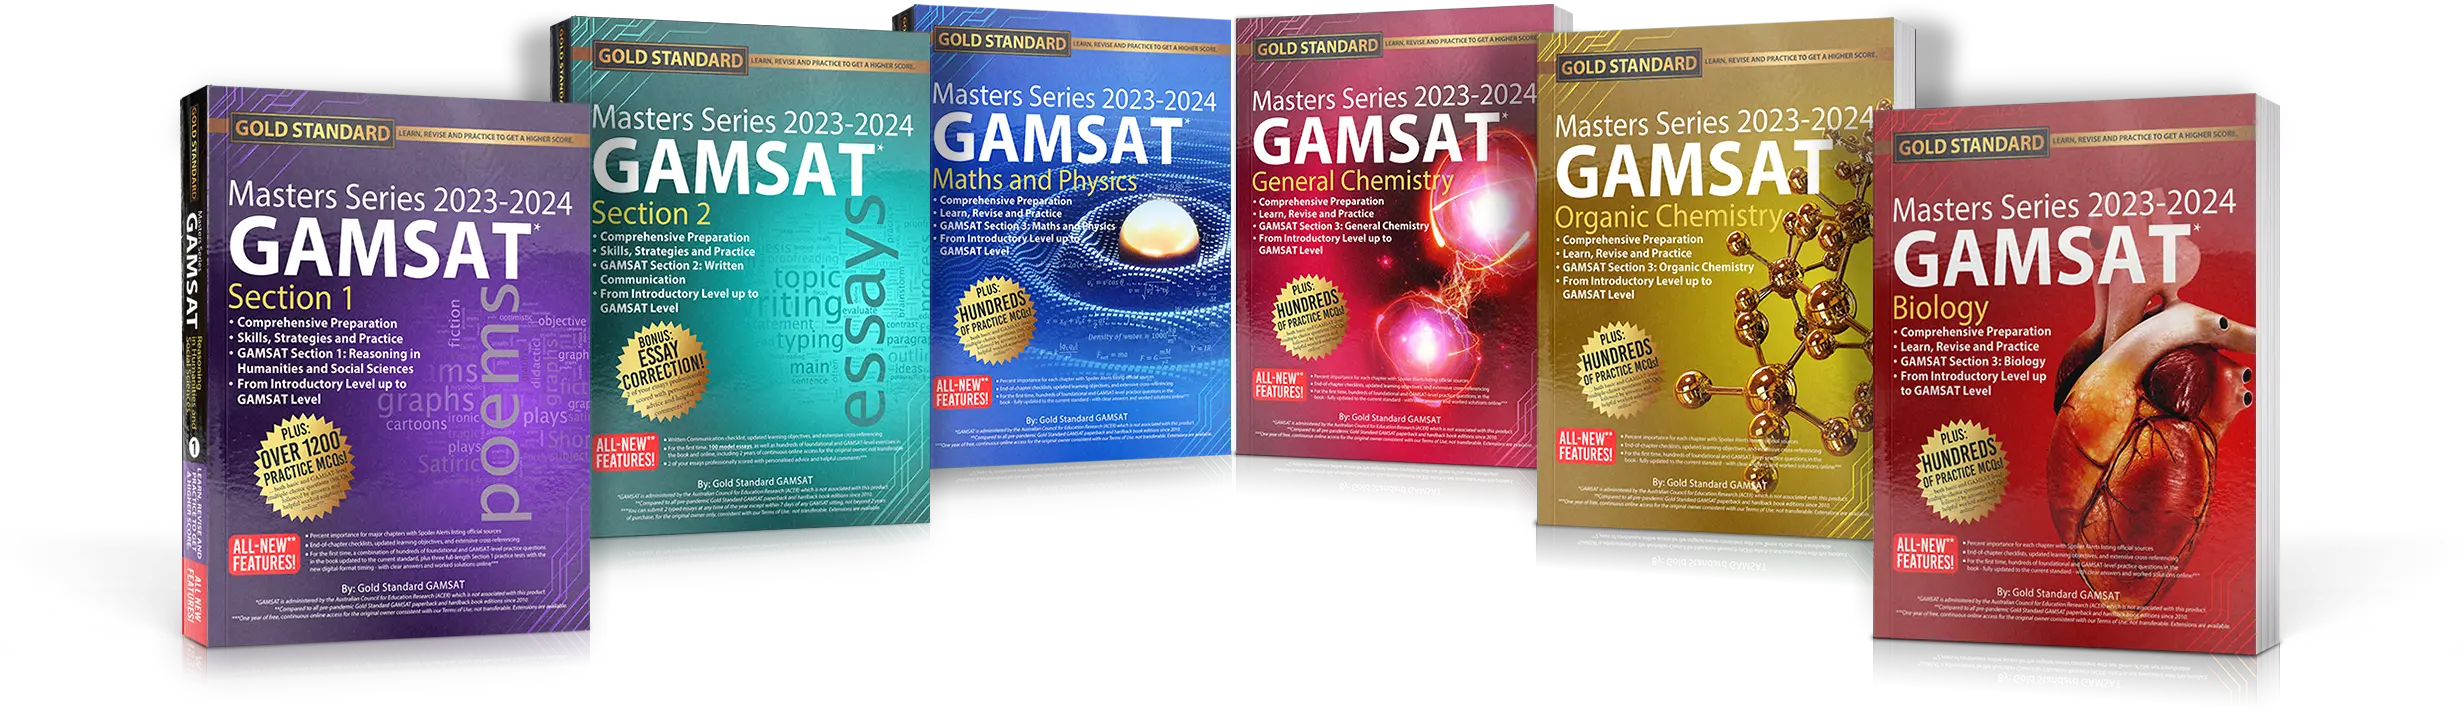 The 2023-2024 New Masters Series GAMSAT Books